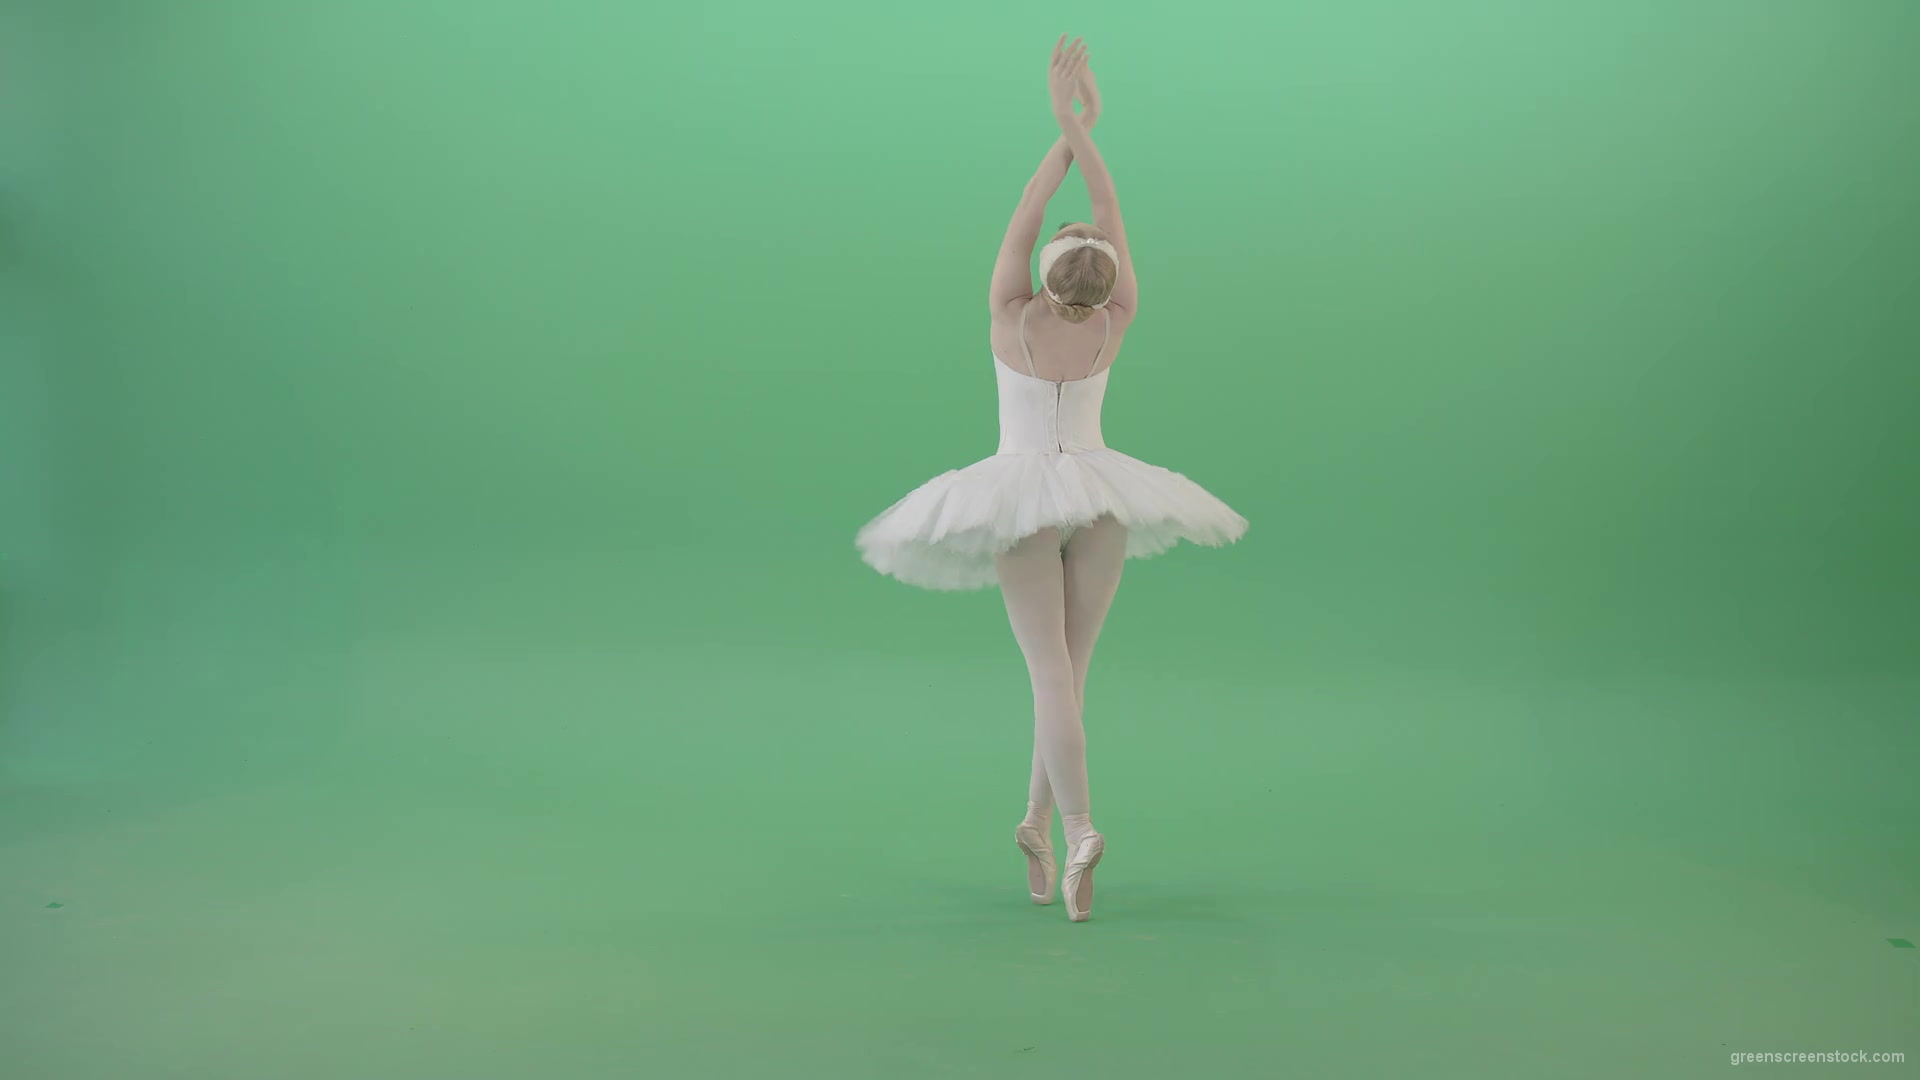 Beautiful-swan-lake-ballet-dance-ballerina-in-back-side-view-dancing-on-green-screen-4K-Video-Footage-1920_006 Green Screen Stock